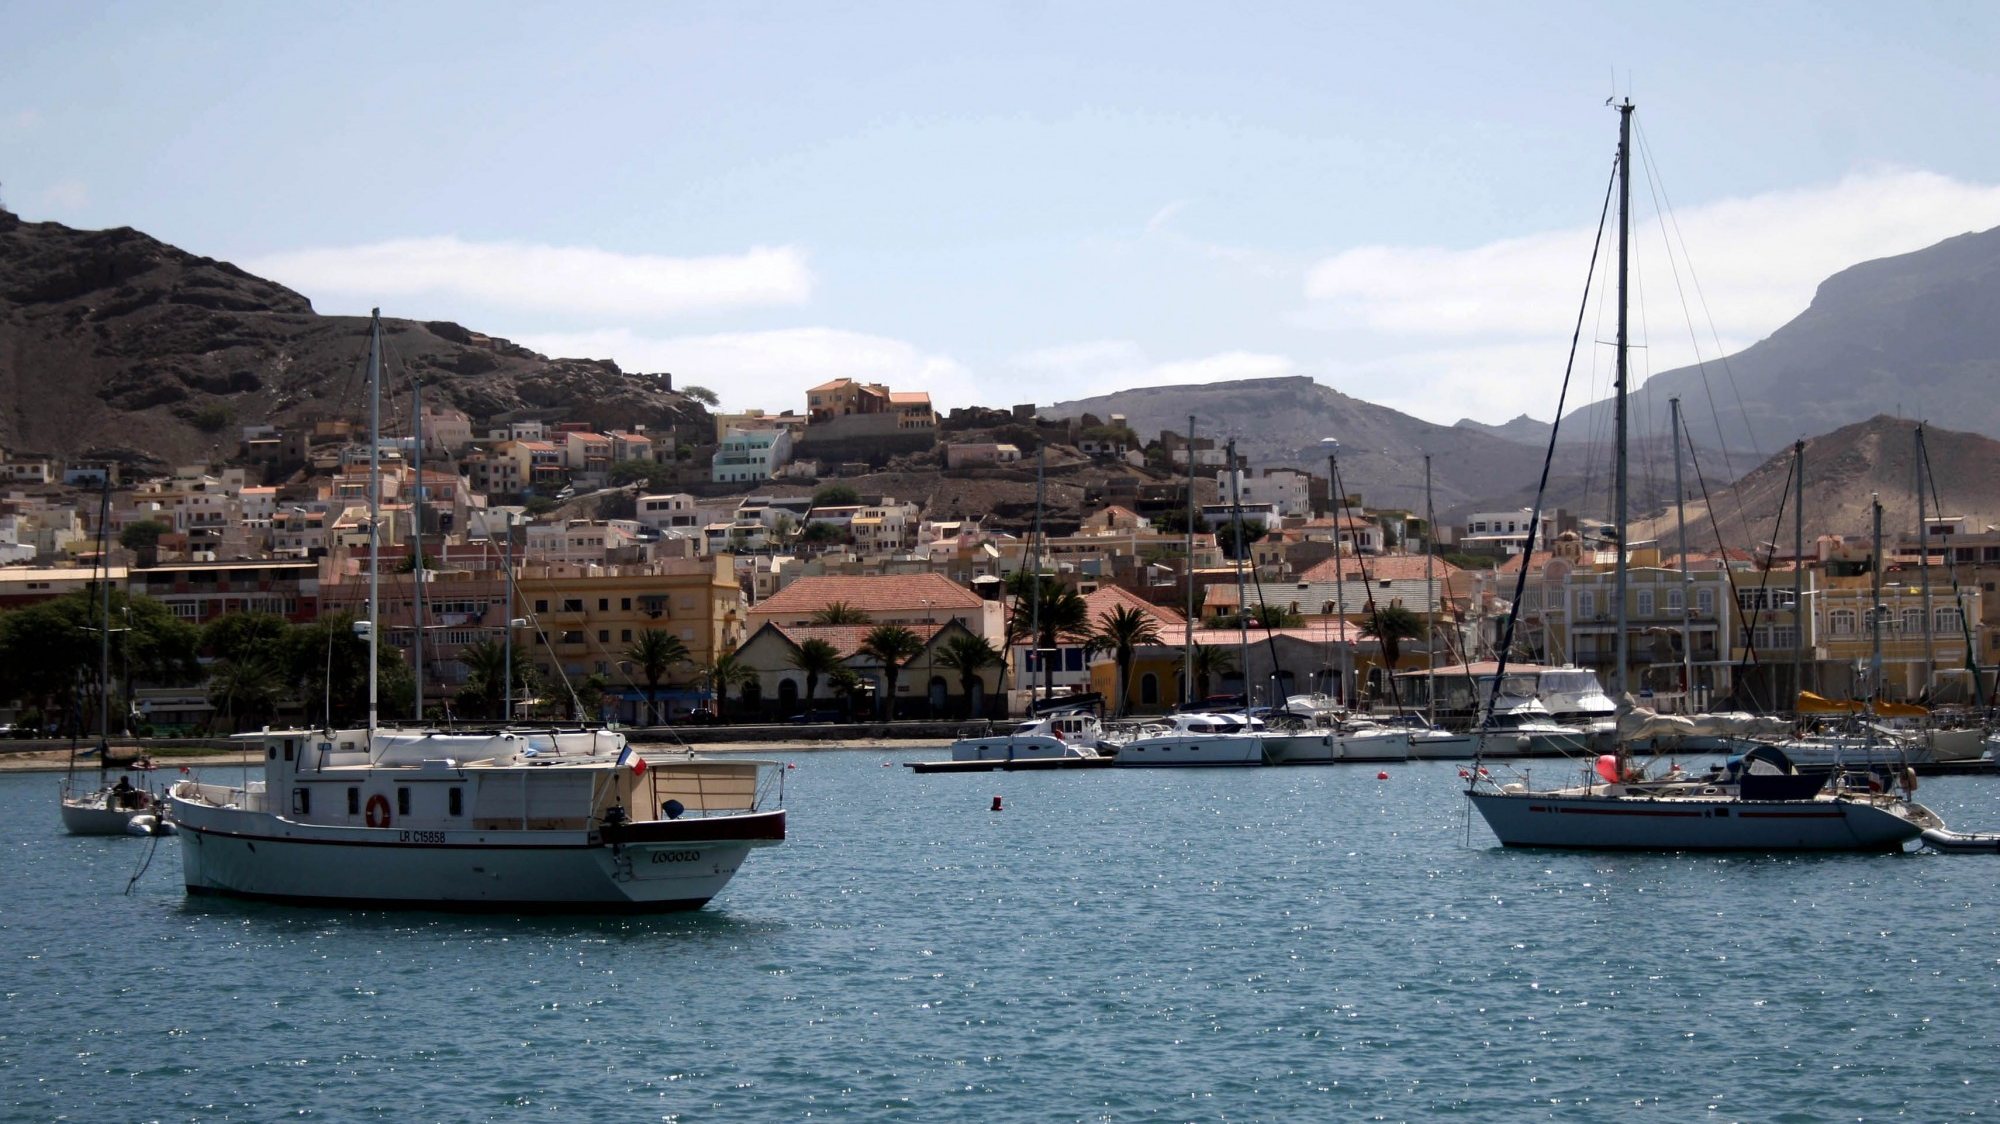 O turismo representa 25% do Produto Interno Bruto de Cabo Verde